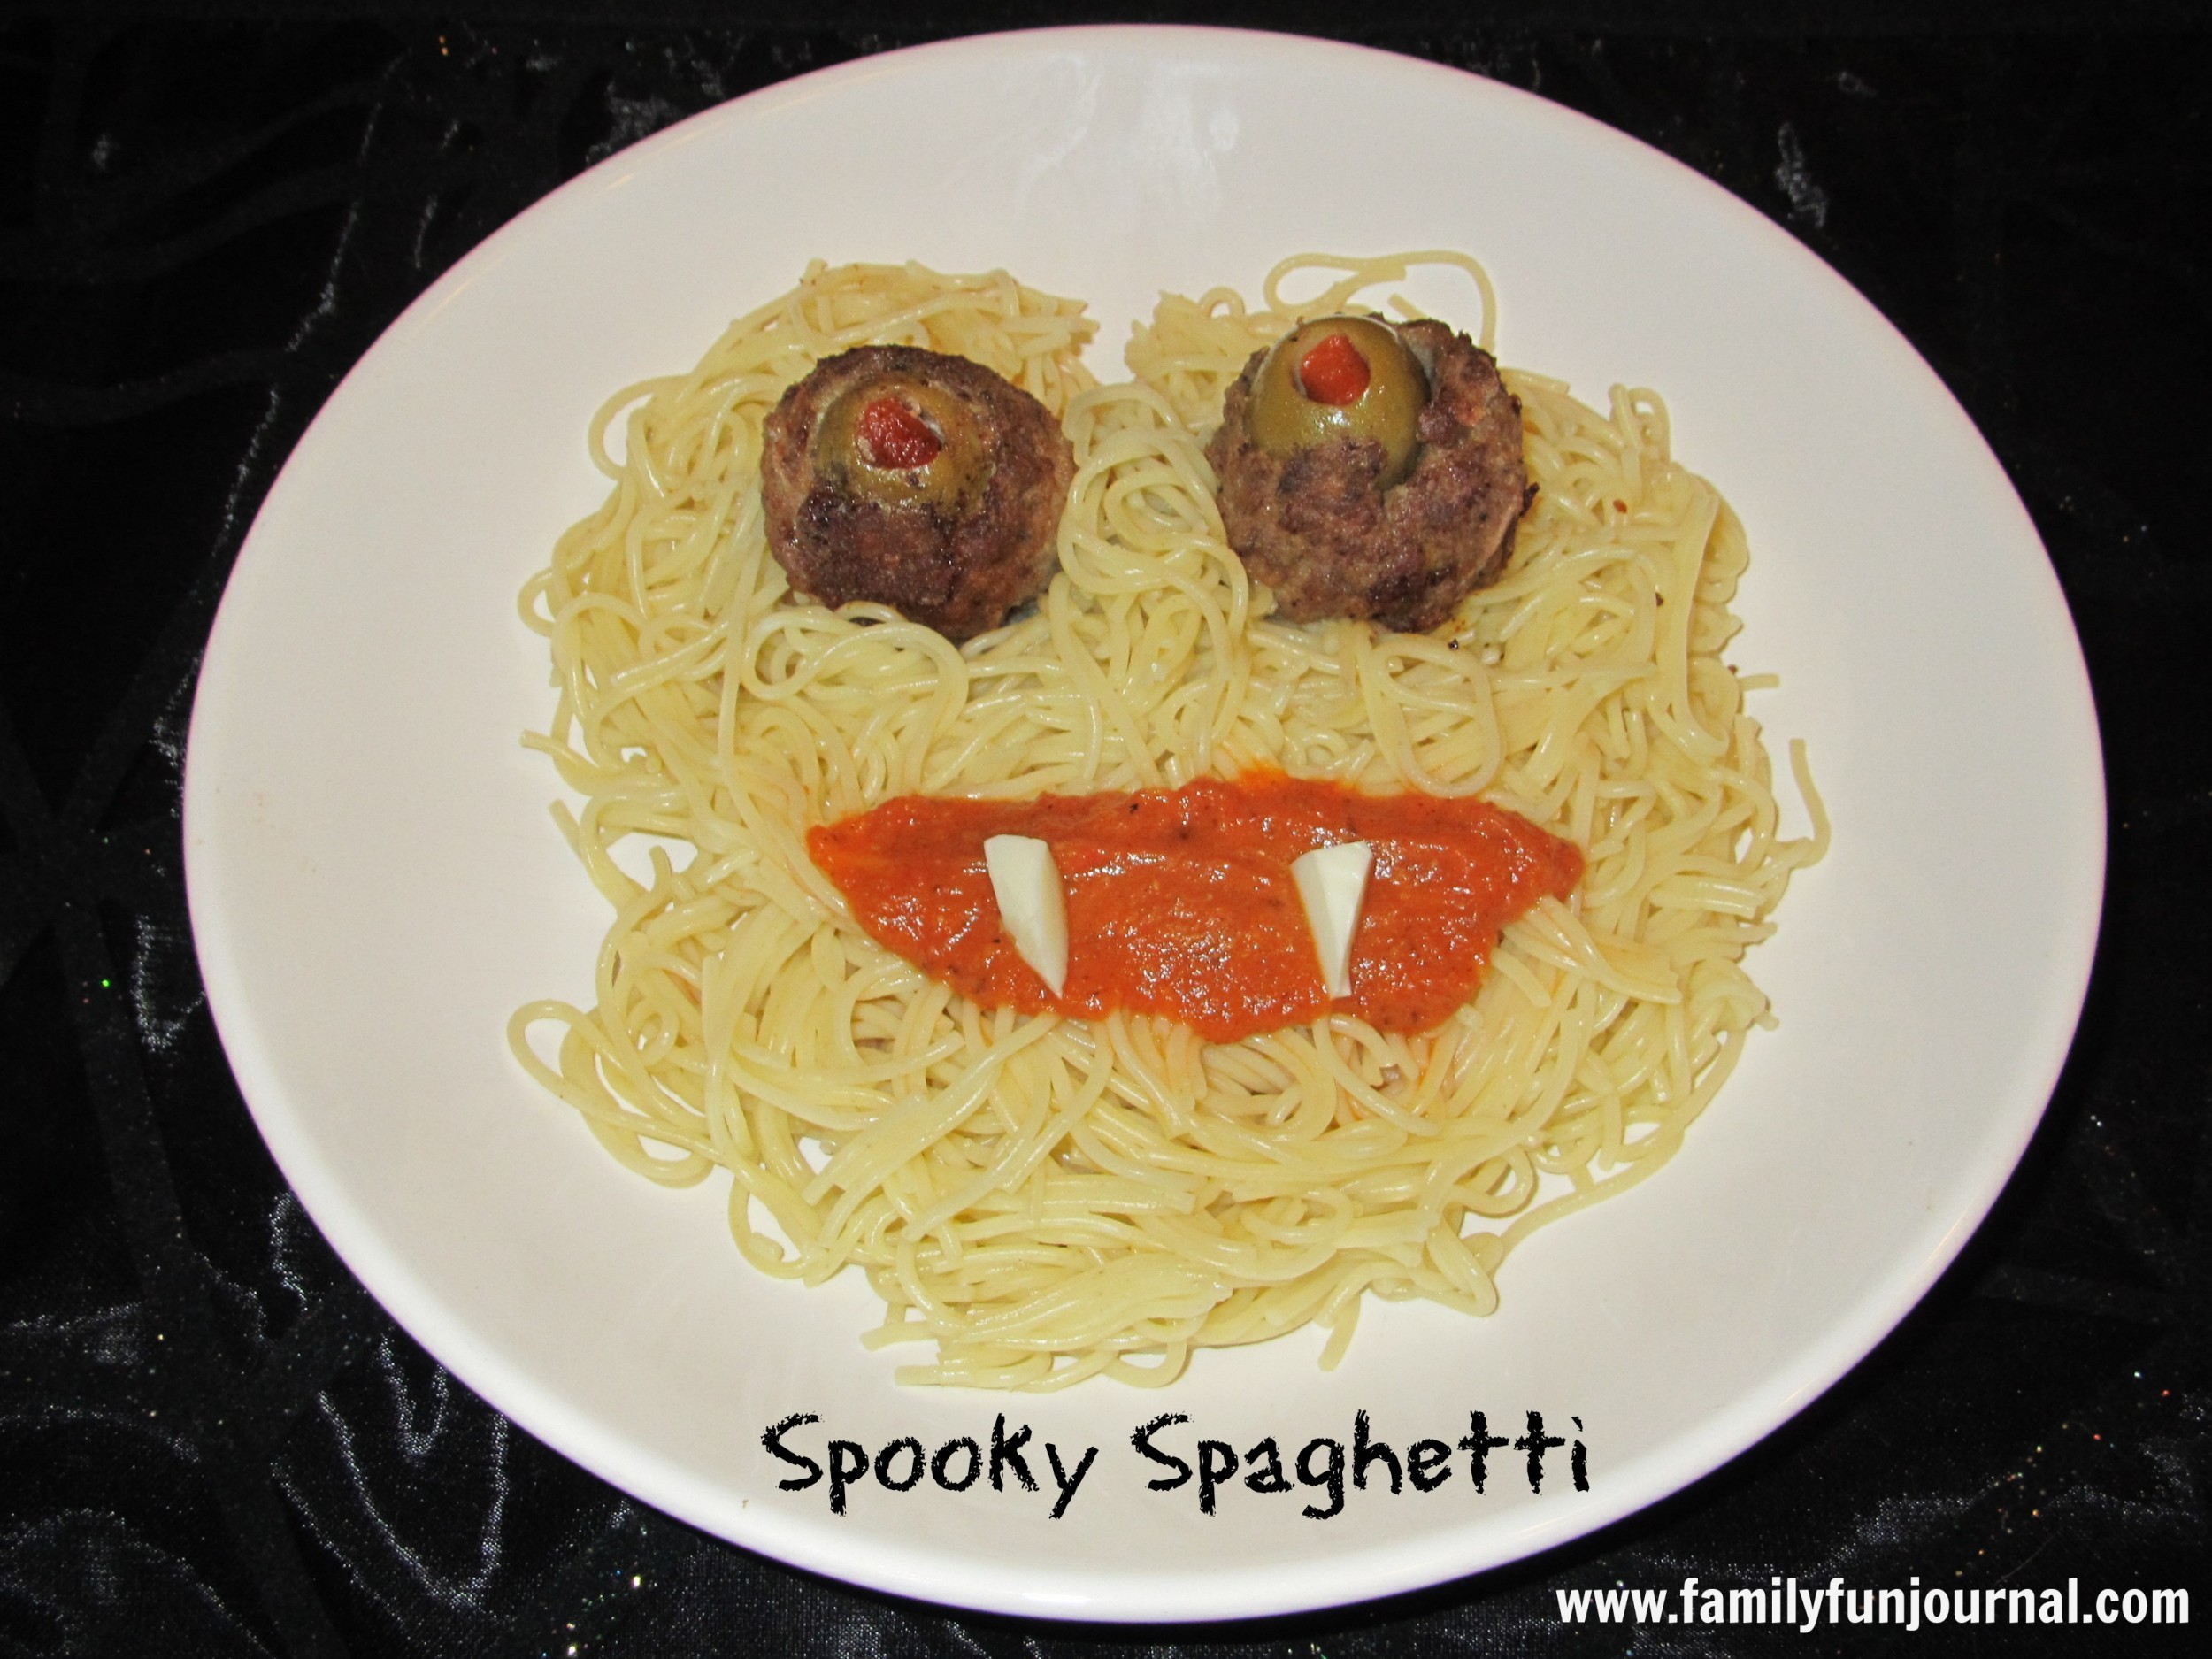 Spooky Spaghetti